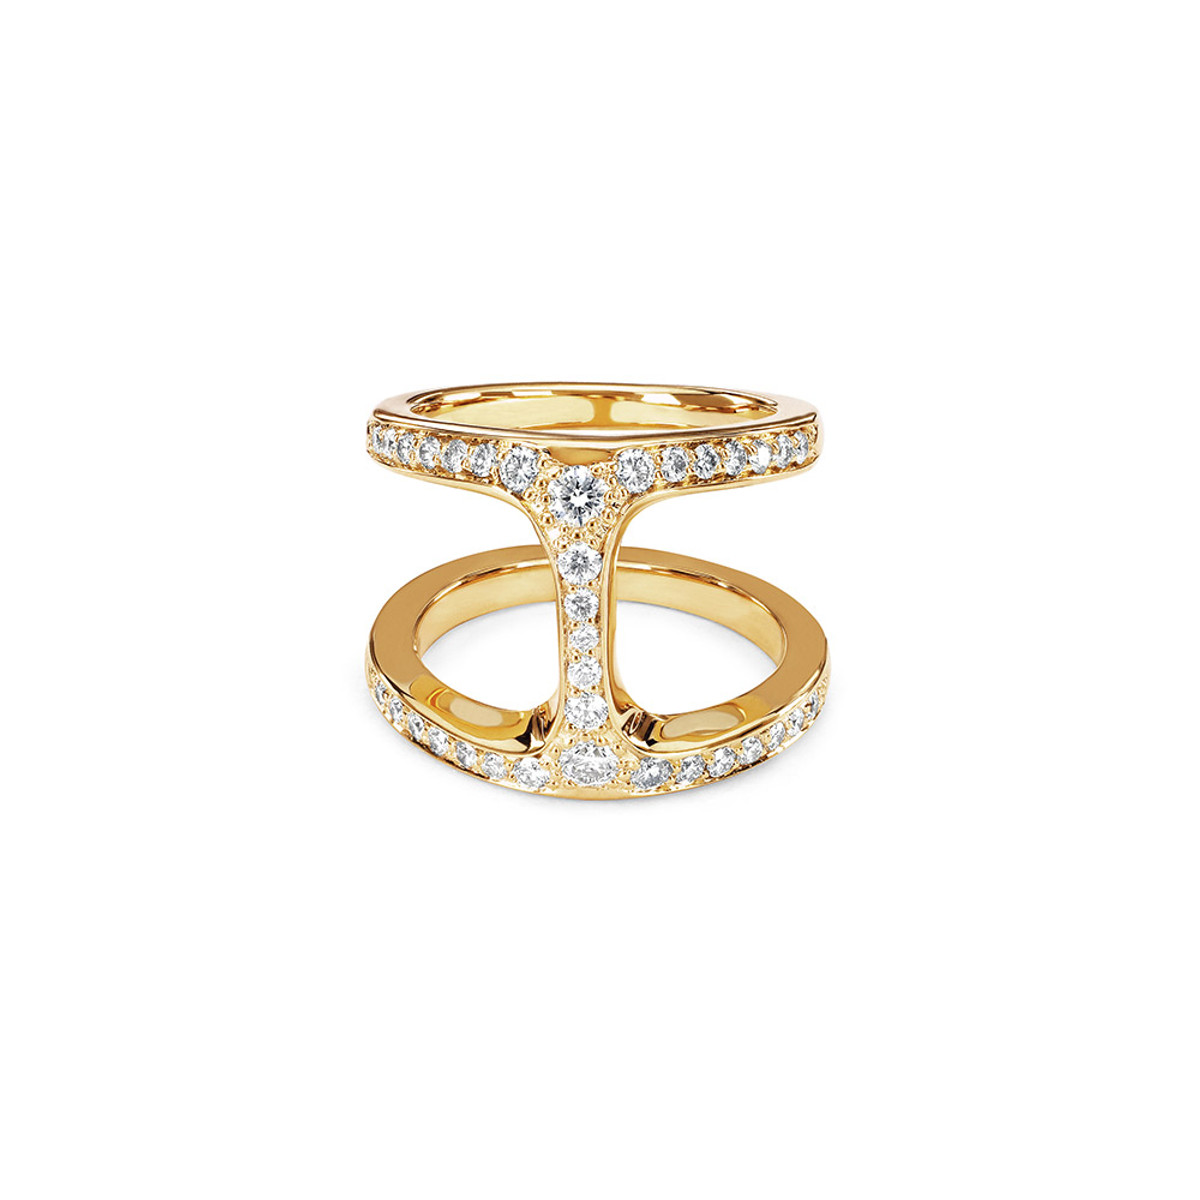 Hoorsenbuhs 18K Yellow Gold Dame Phantom Ring with Diamonds-57487 Product Image